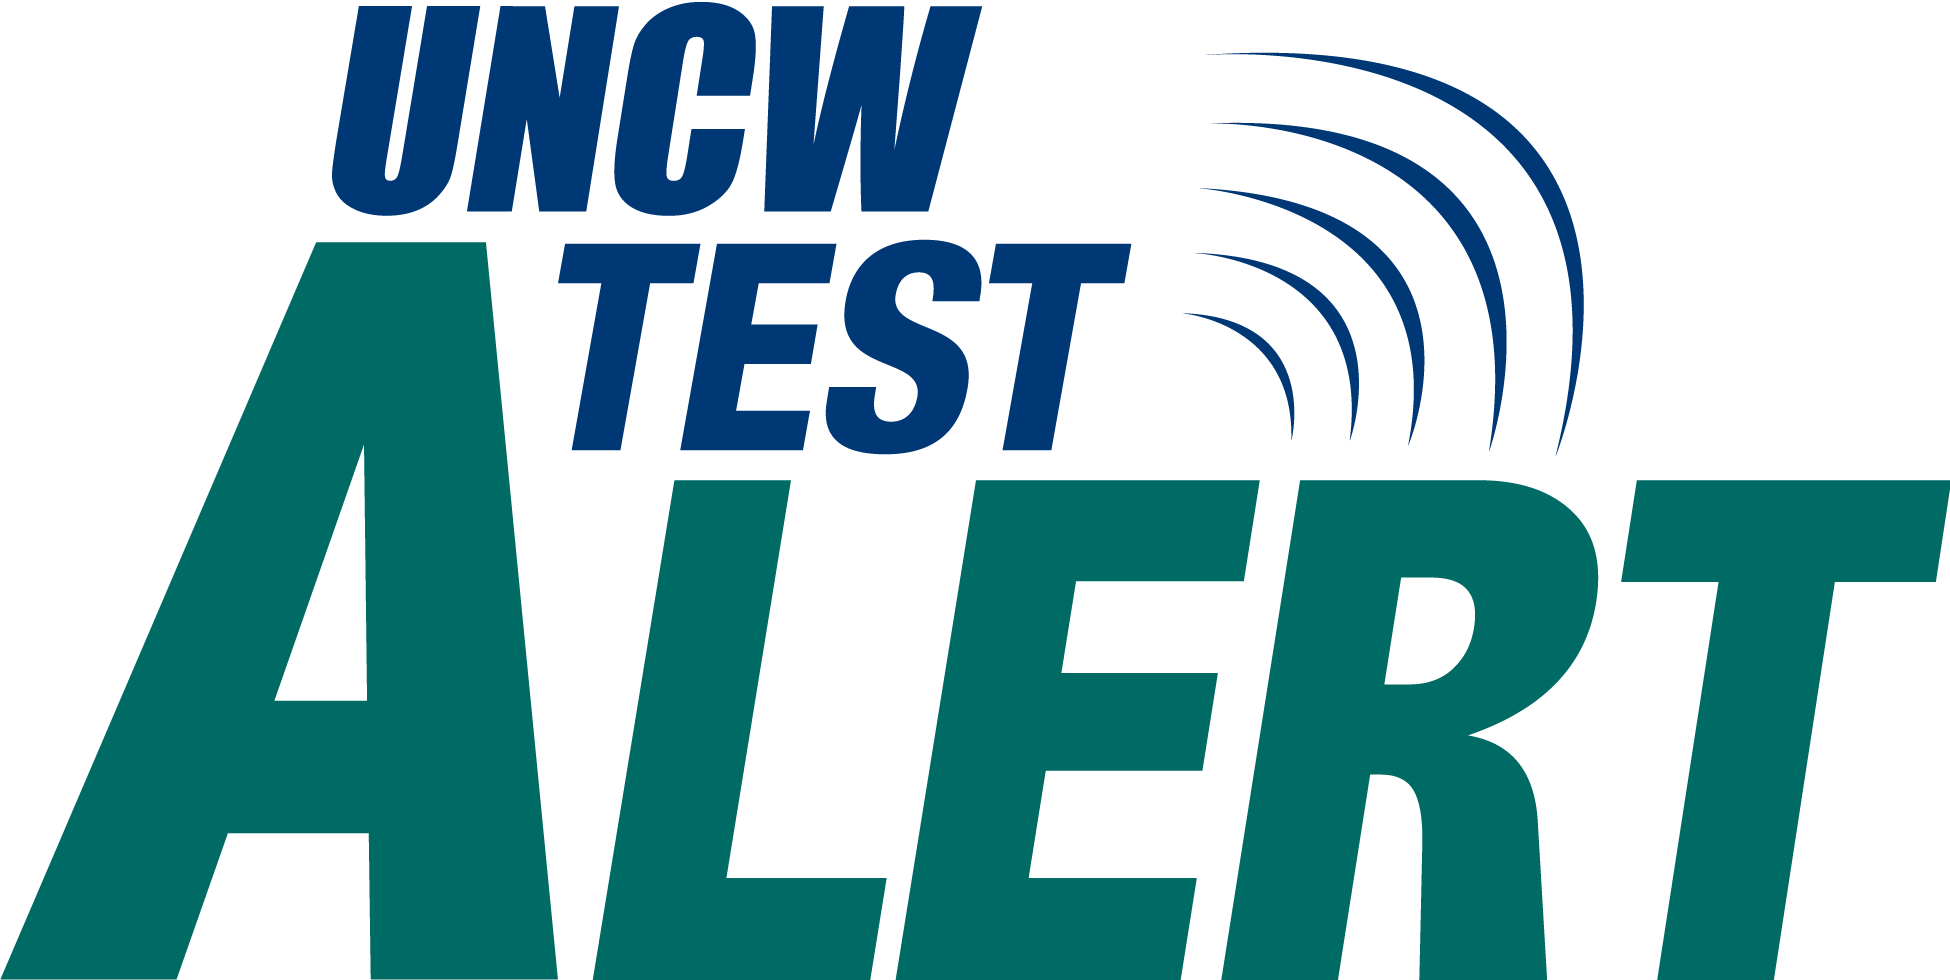 UNCW Test Alert